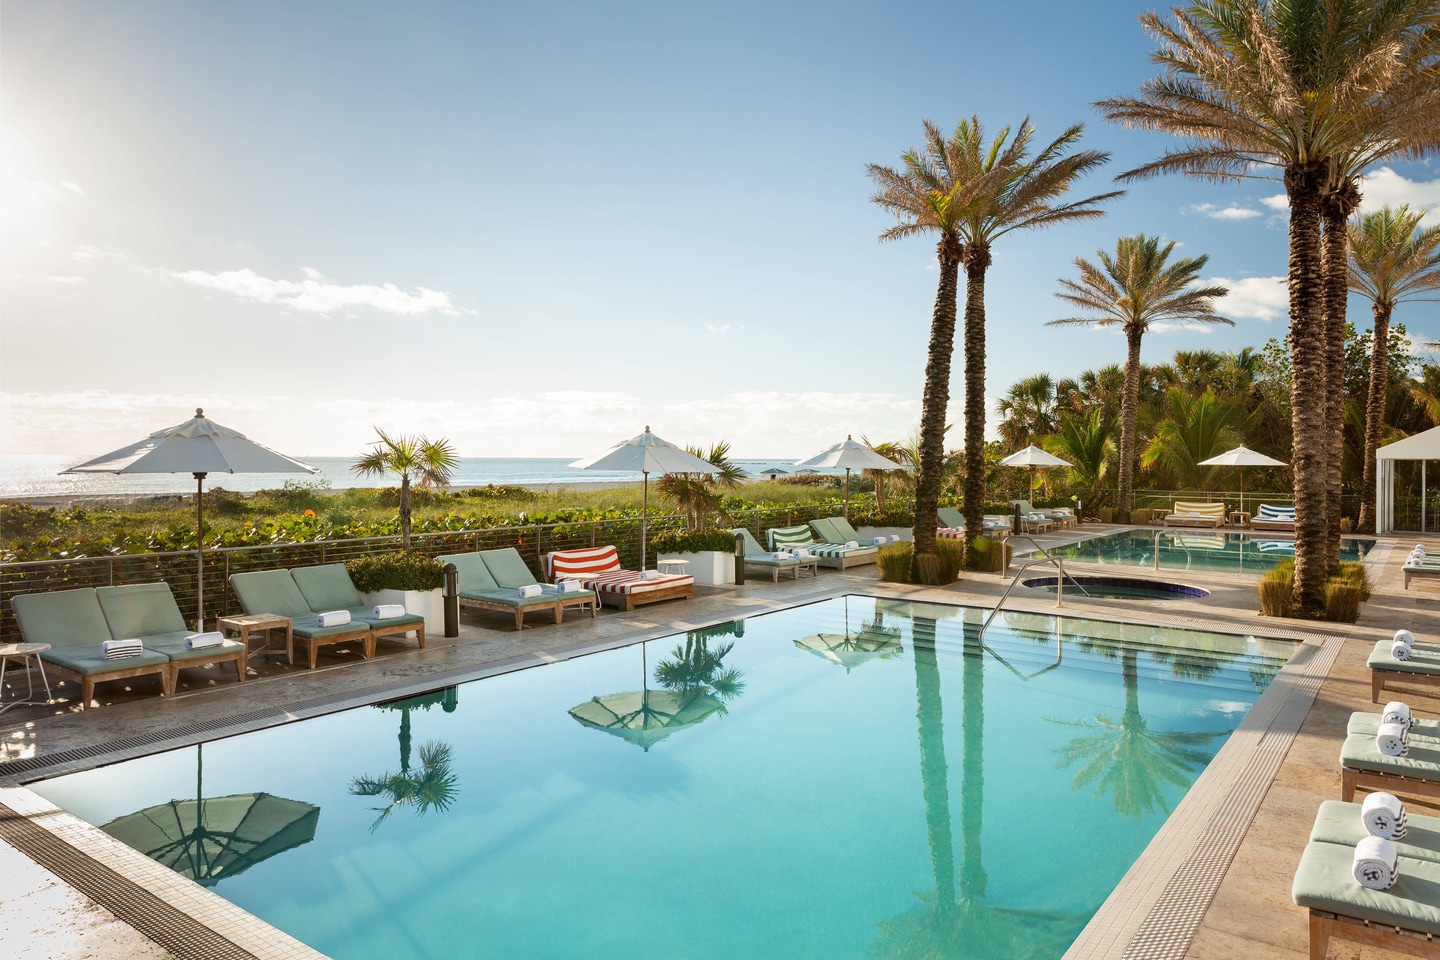 Best Marriott Beachfront Hotels & Resorts in Florida For Your Marriott Free Night Certificates